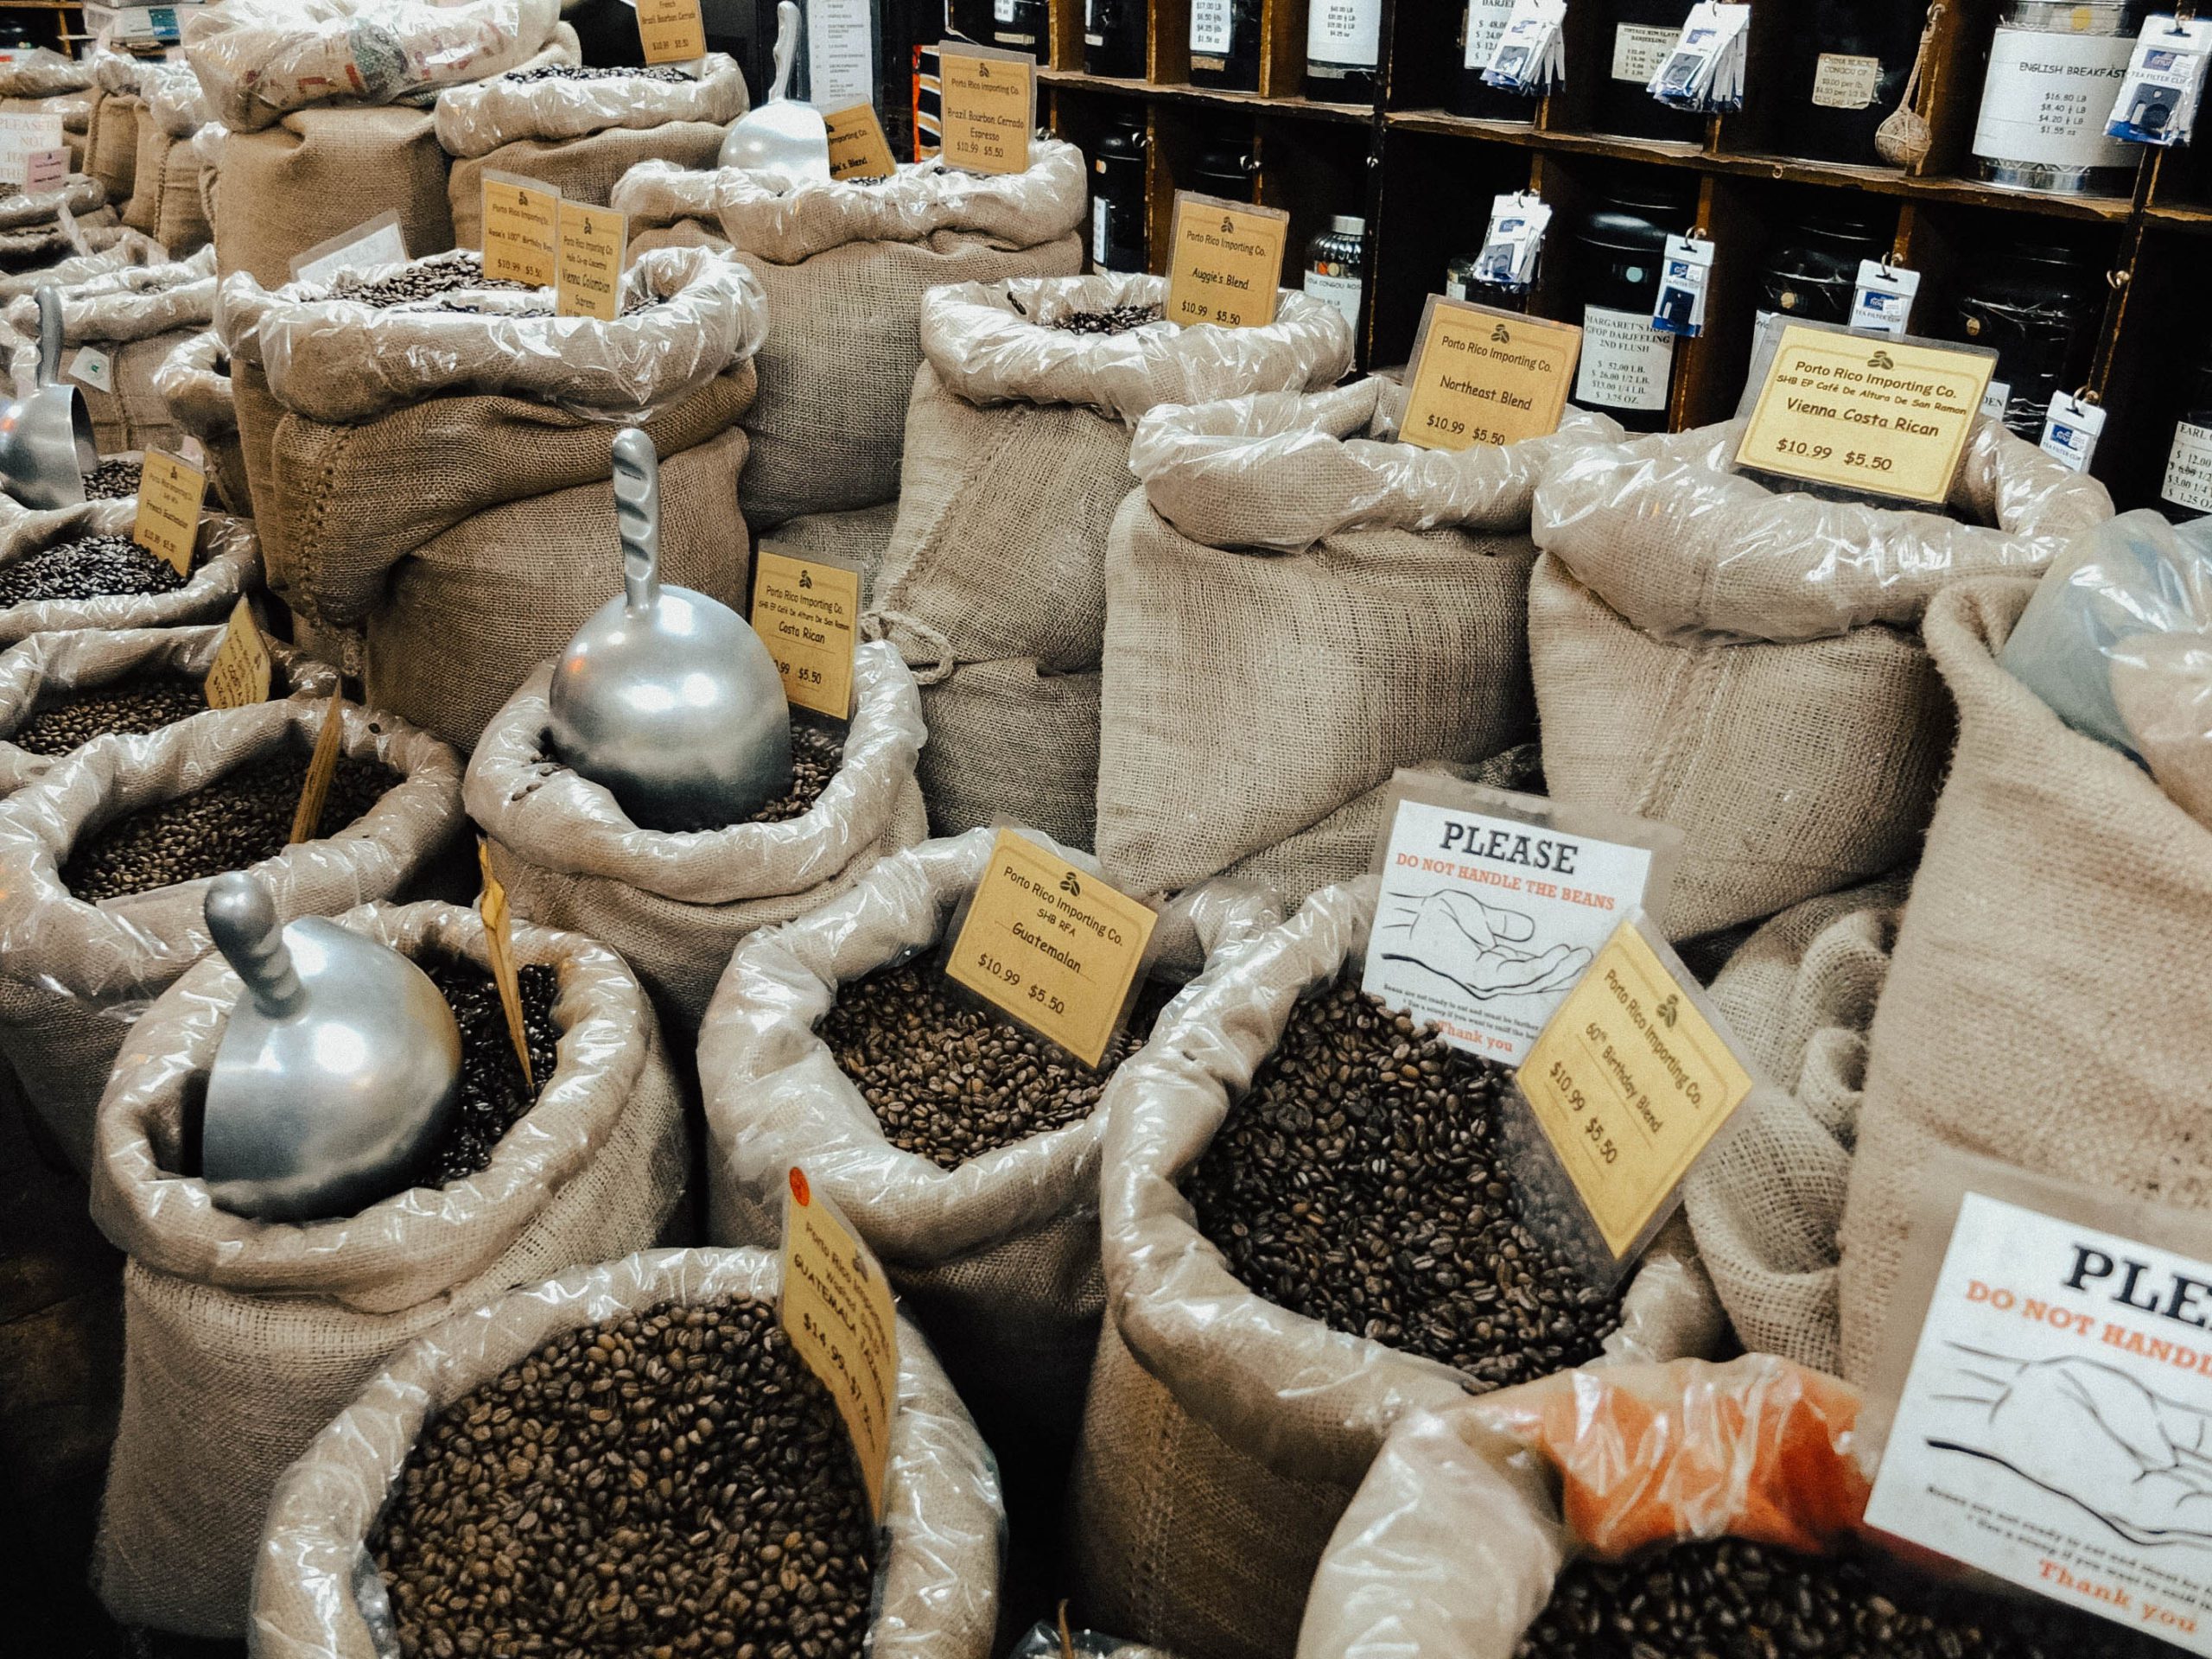 sacks full of coffee beans - New York City Food Tour